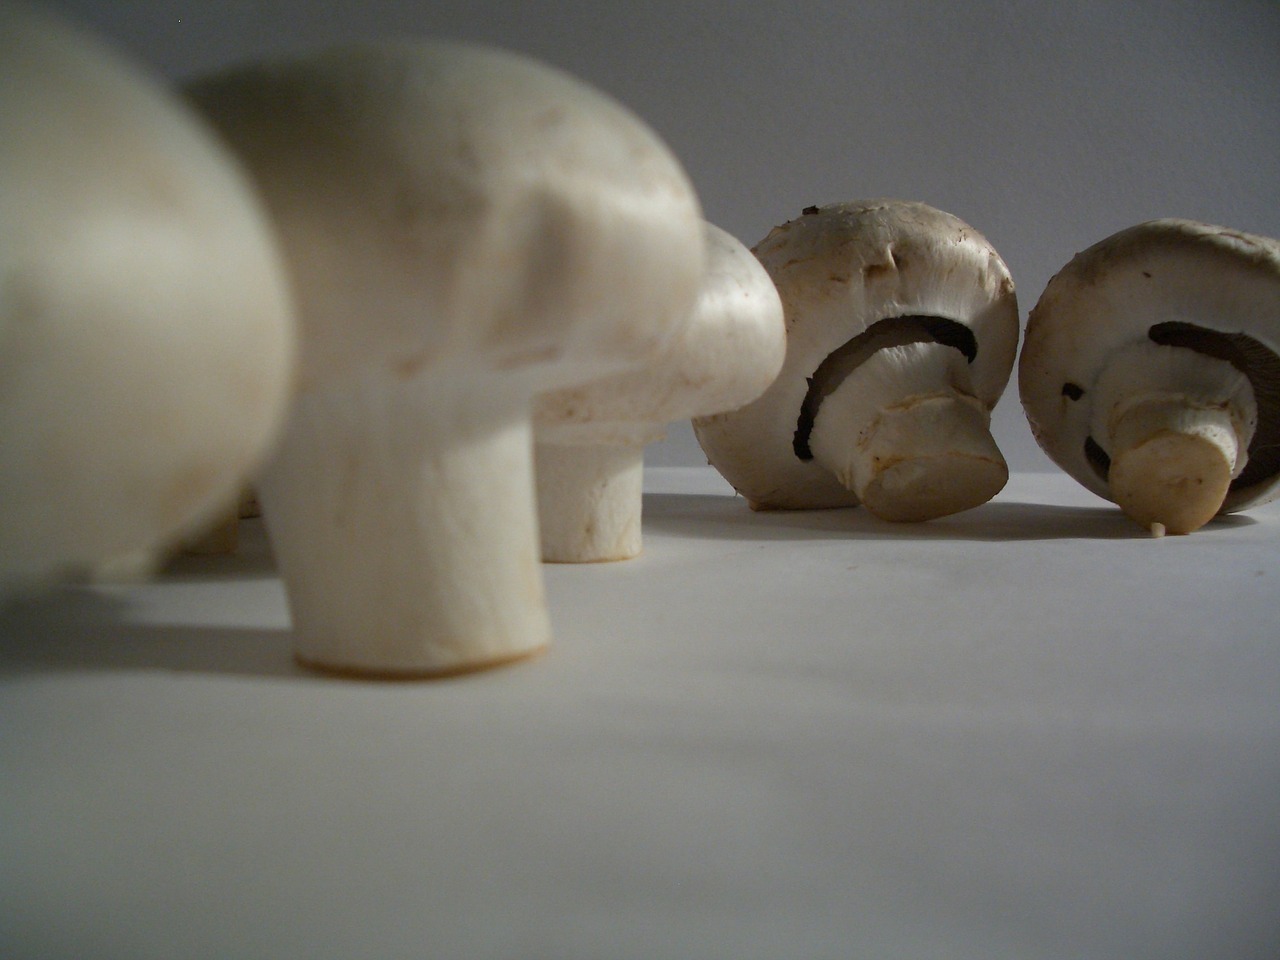 Agaricus mushroom with vitamin D